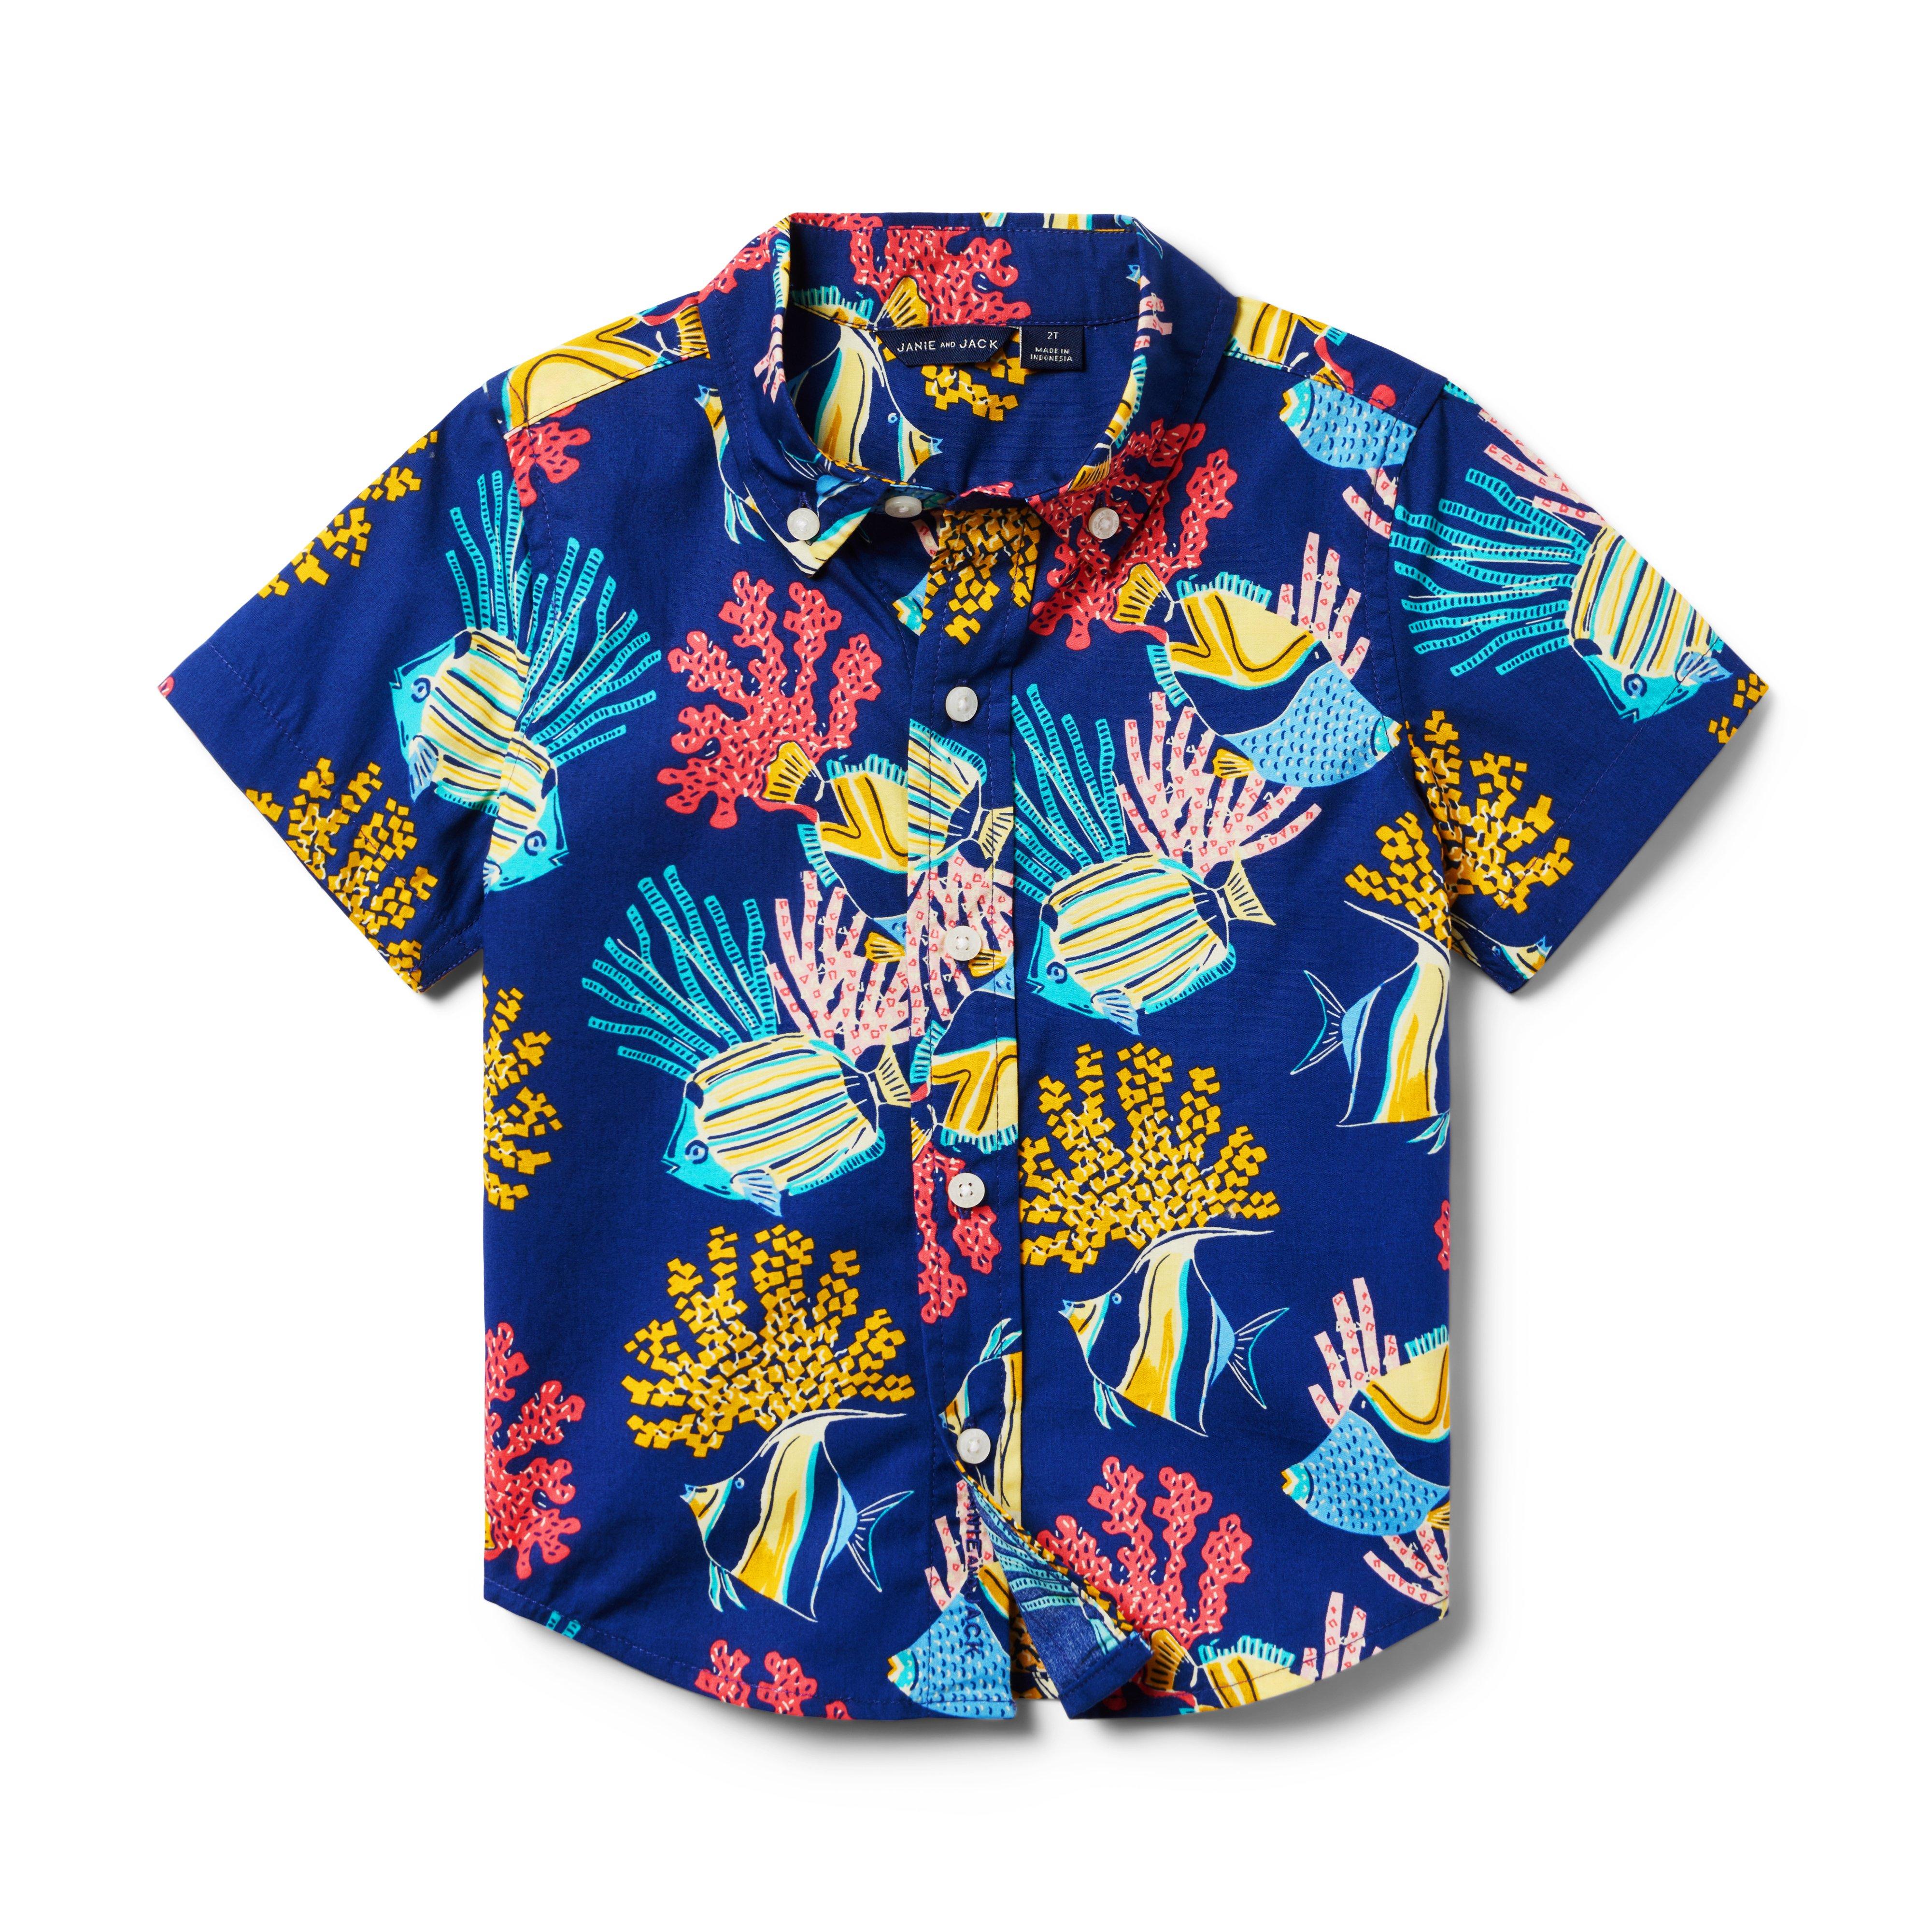 Coral Fish Poplin Shirt